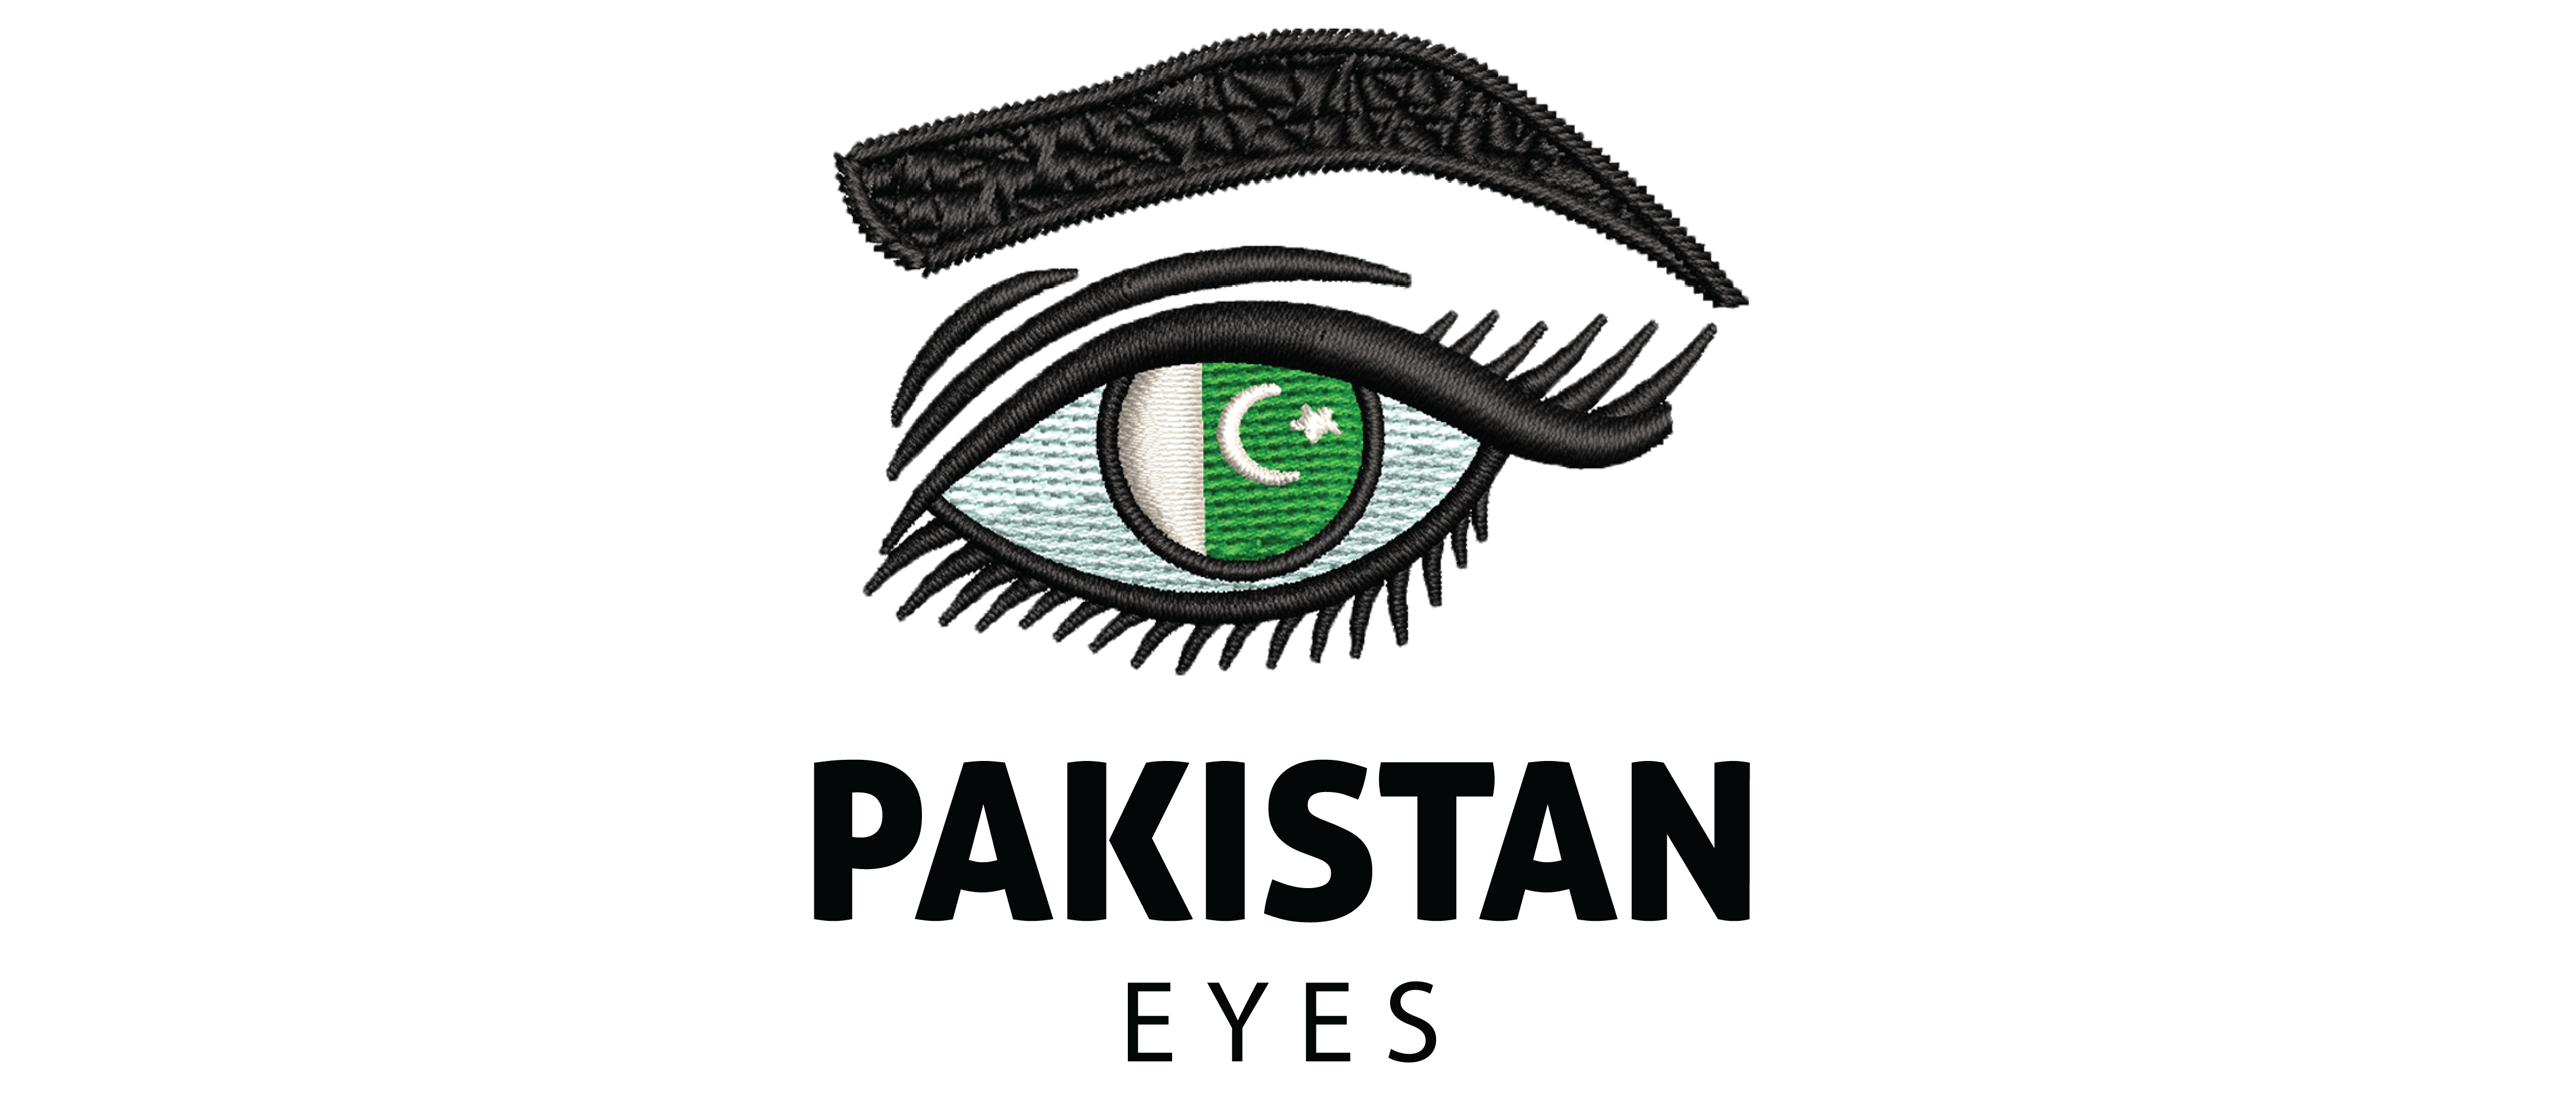 pakistaneyes